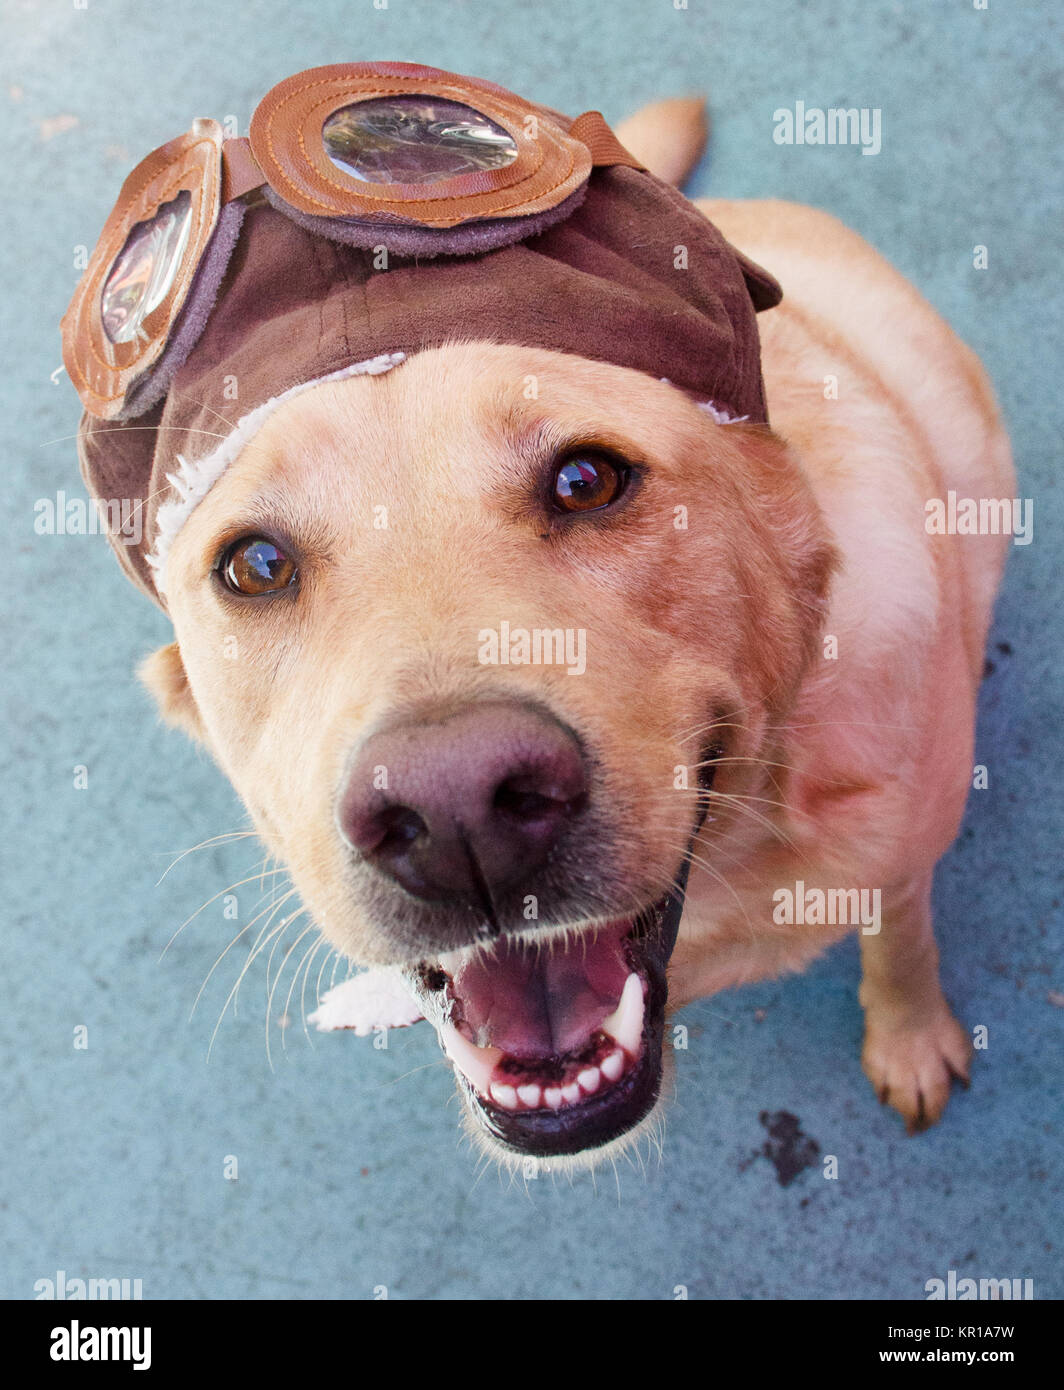 Labrador retriever dog wearing an aviation hat Stock Photo